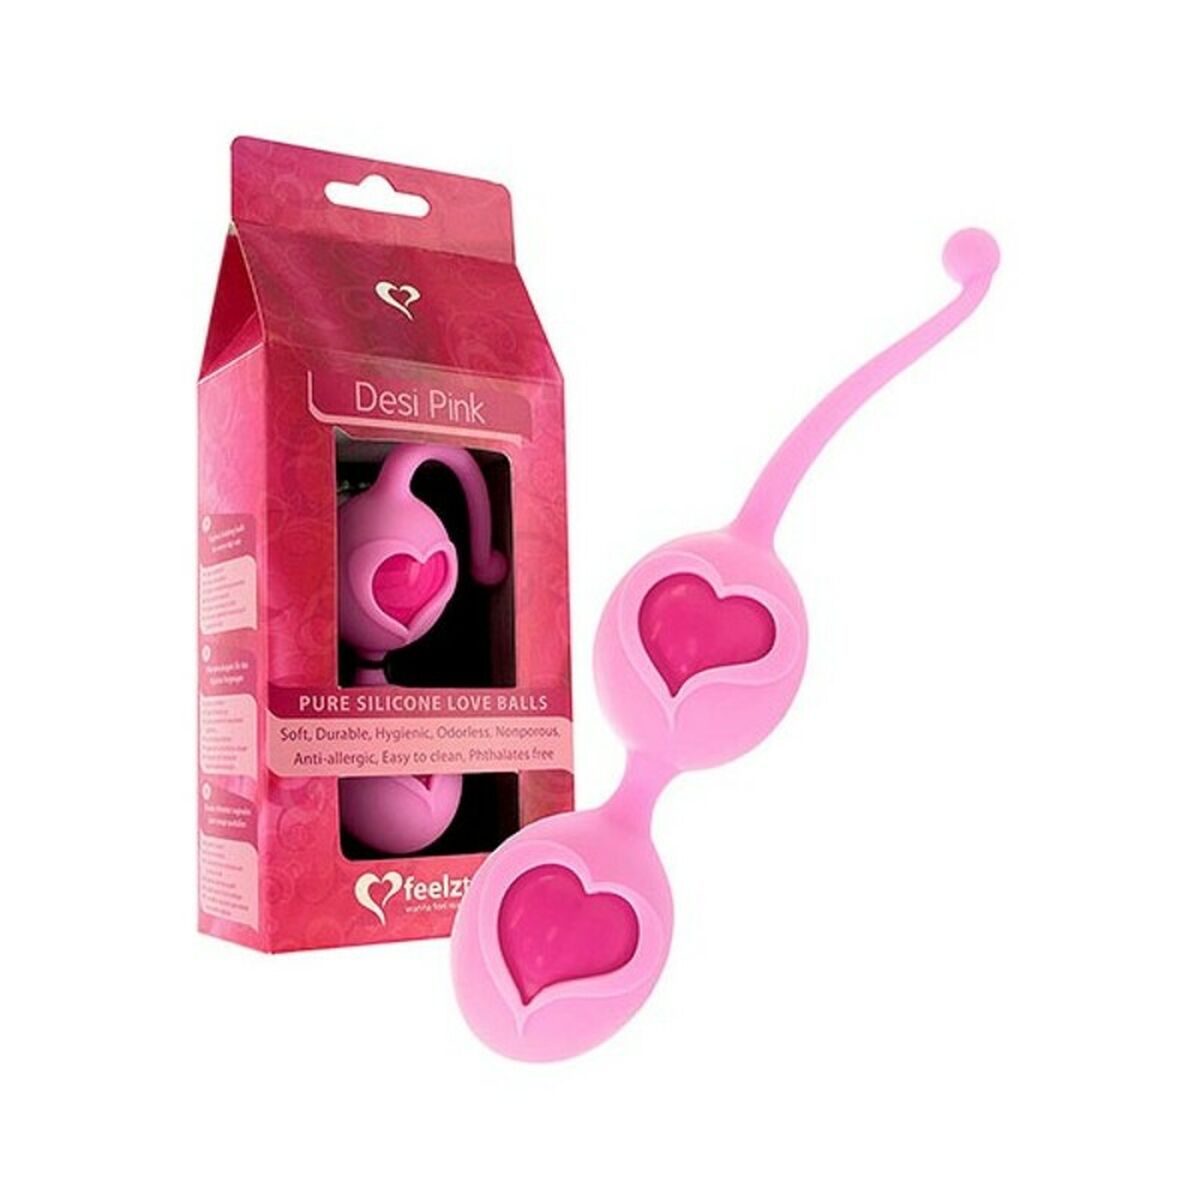 Kaufe Orgasmusbälle FeelzToys Desi Pink bei AWK Flagship um € 32.00